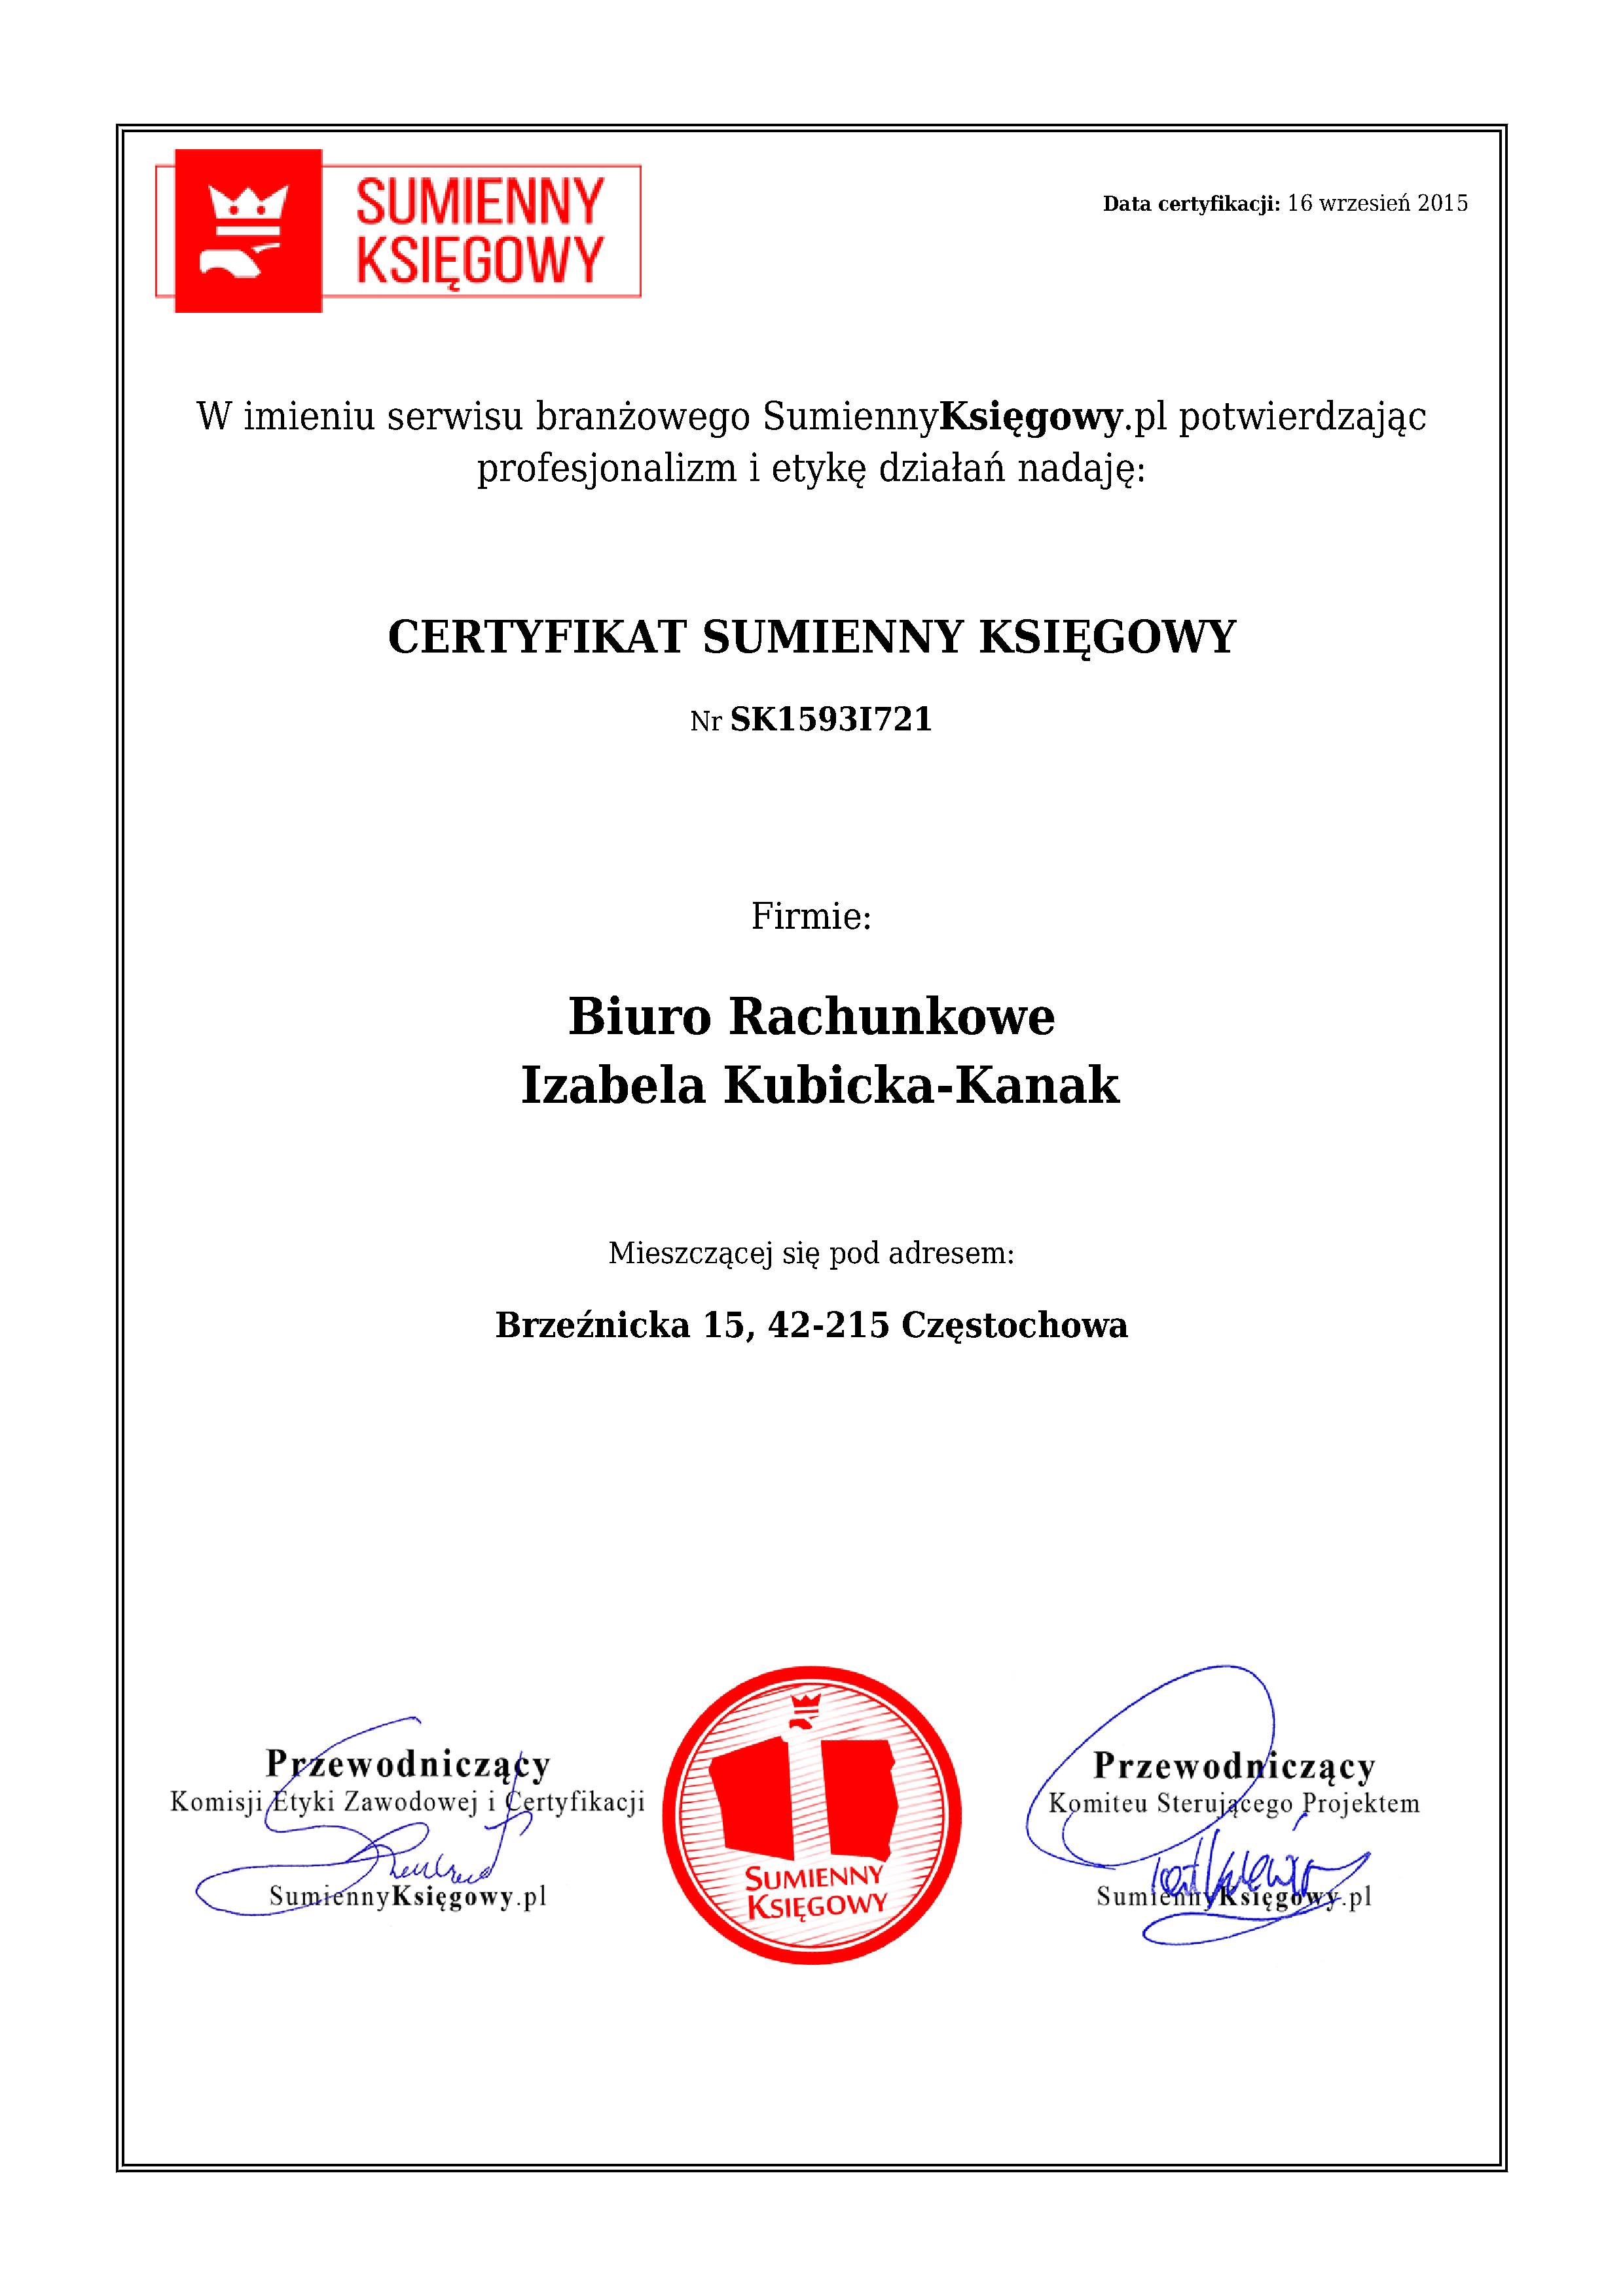 Biuro Rachunkowe Izabela Kubicka-Kanak certyfikat 1